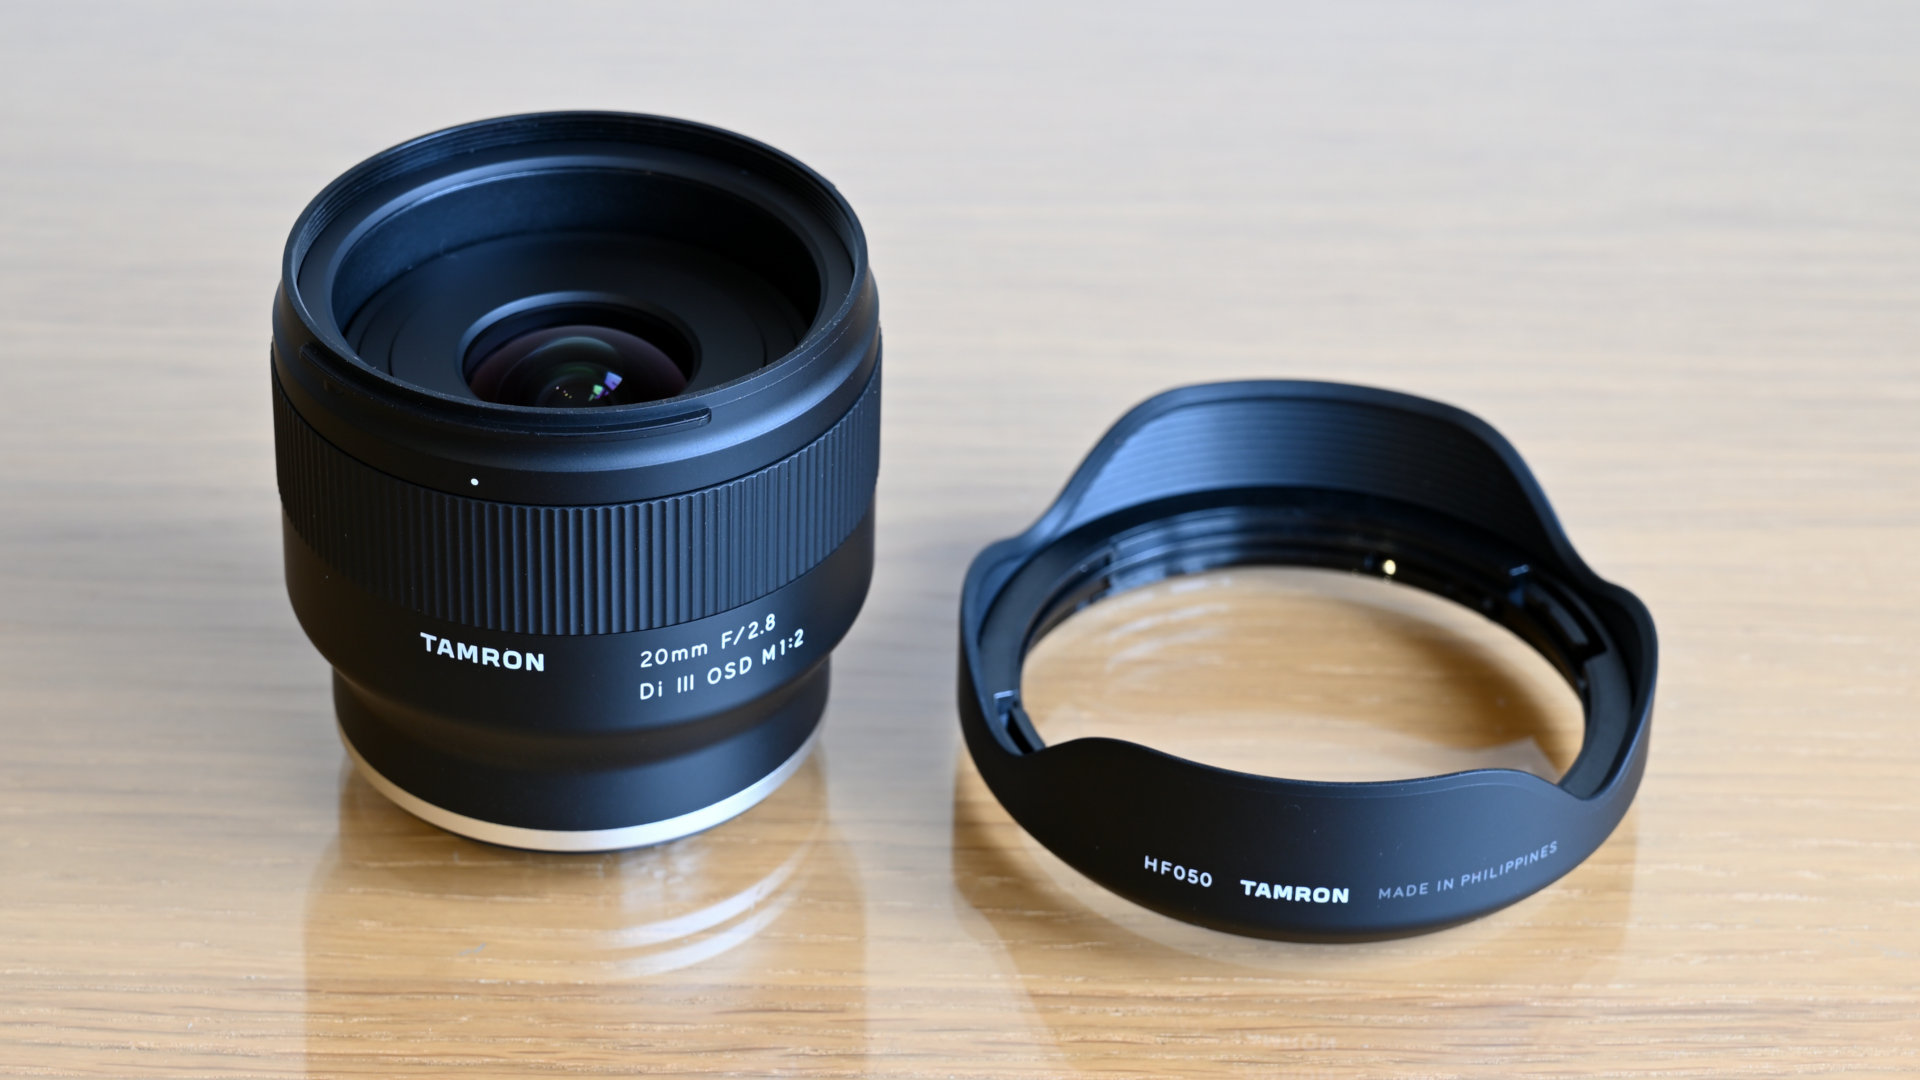 Tamron 20mm f/2.8 Di III OSD M 1:2 review | Digital Camera World